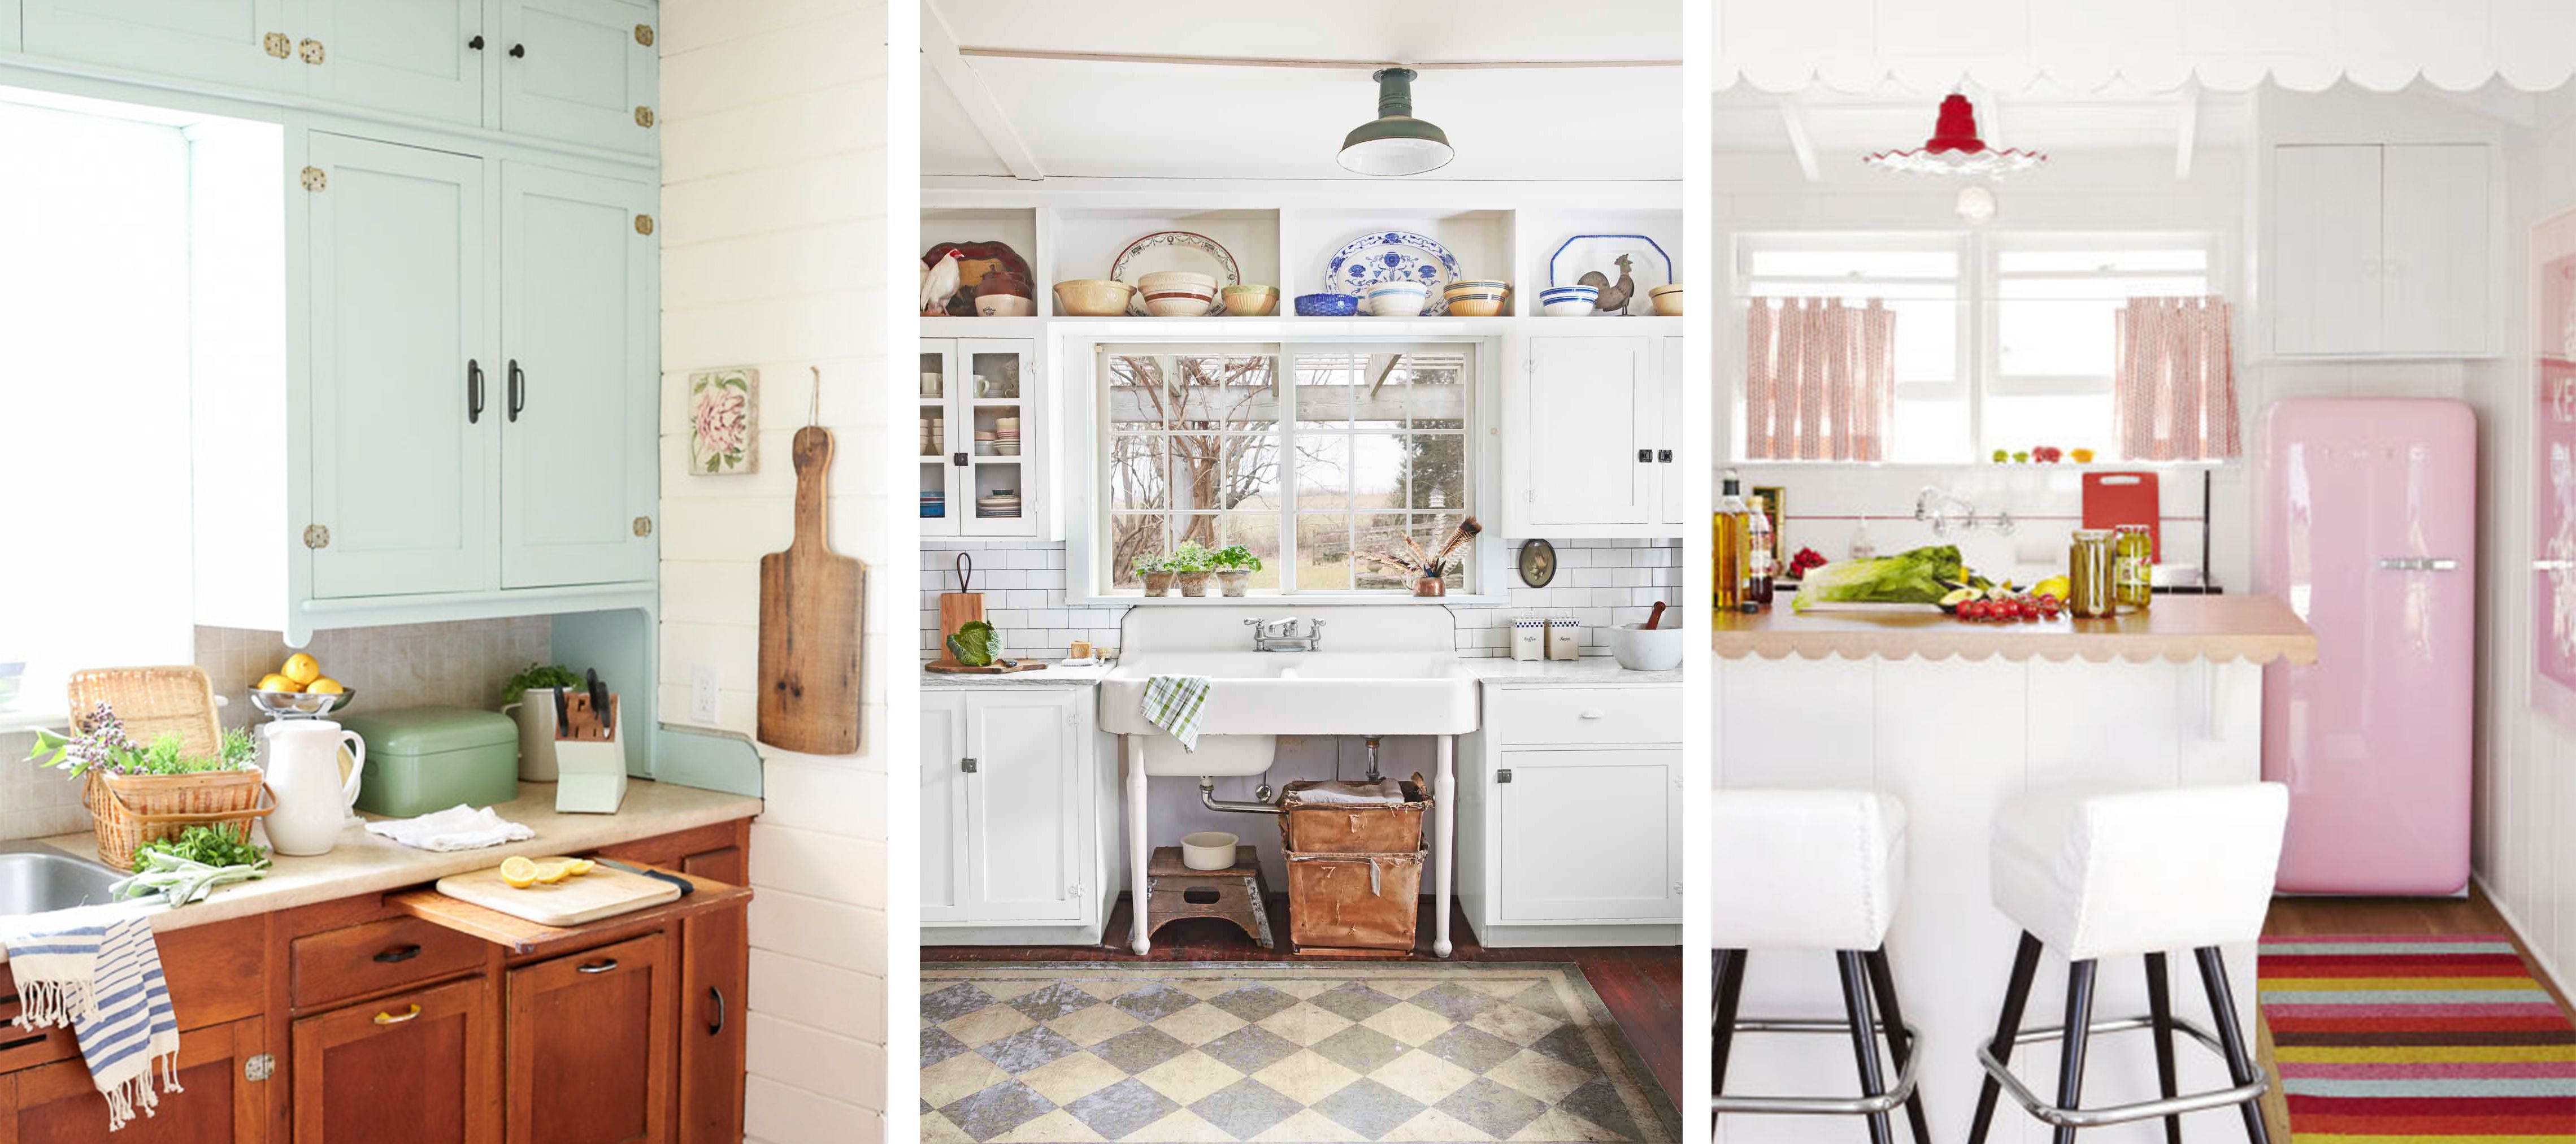 18 Vintage Kitchen Decorating Ideas   Design Inspiration for Retro ...